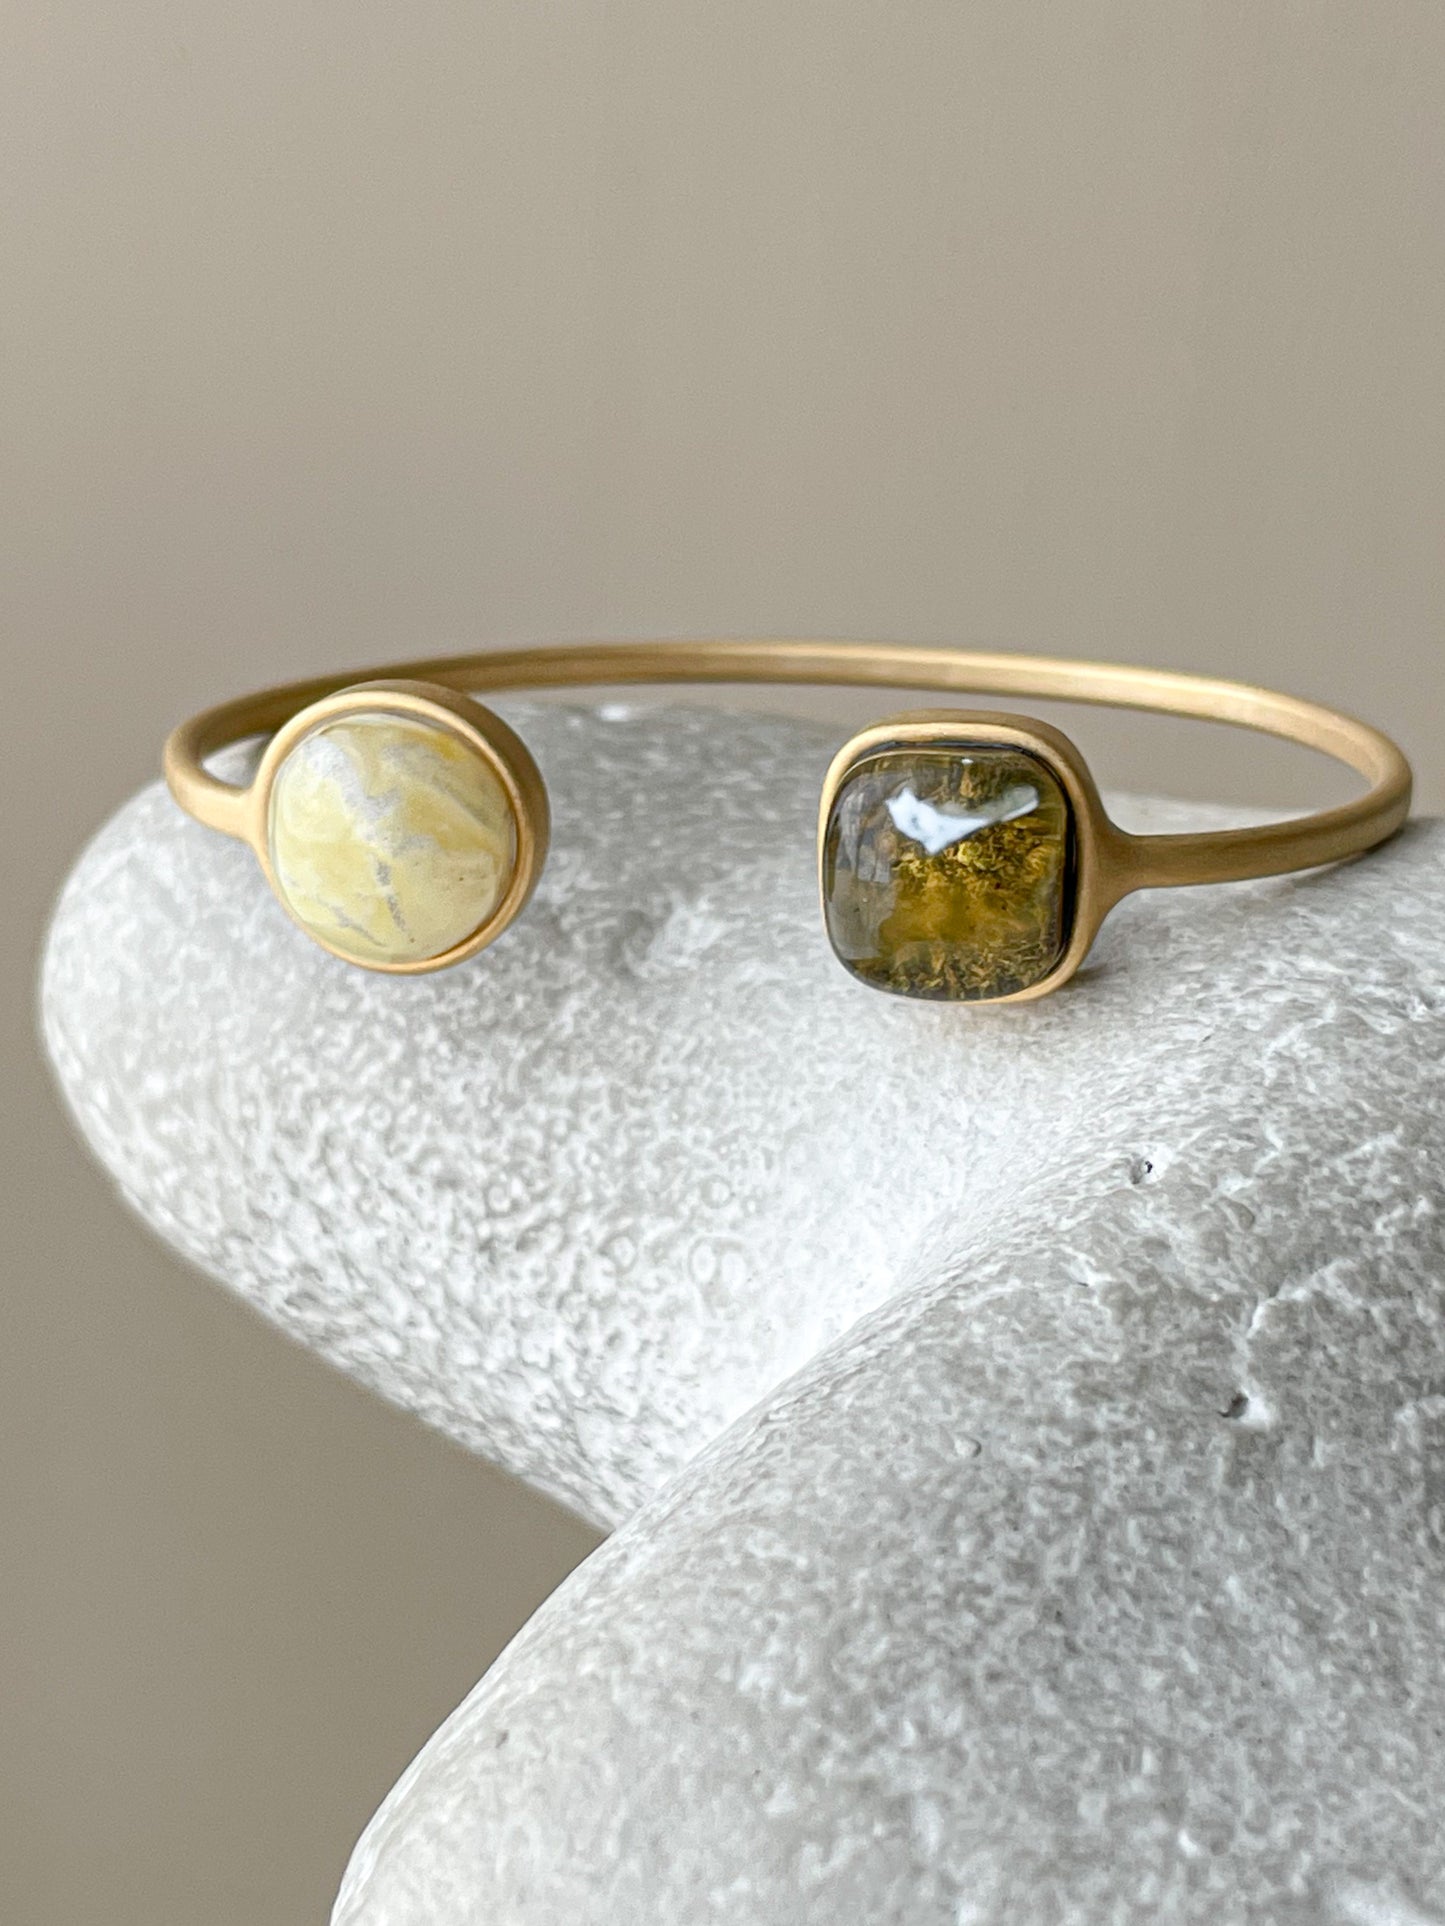 Amber bracelet - Gold plated silver - Cuff bracelet collection - Size 6.3